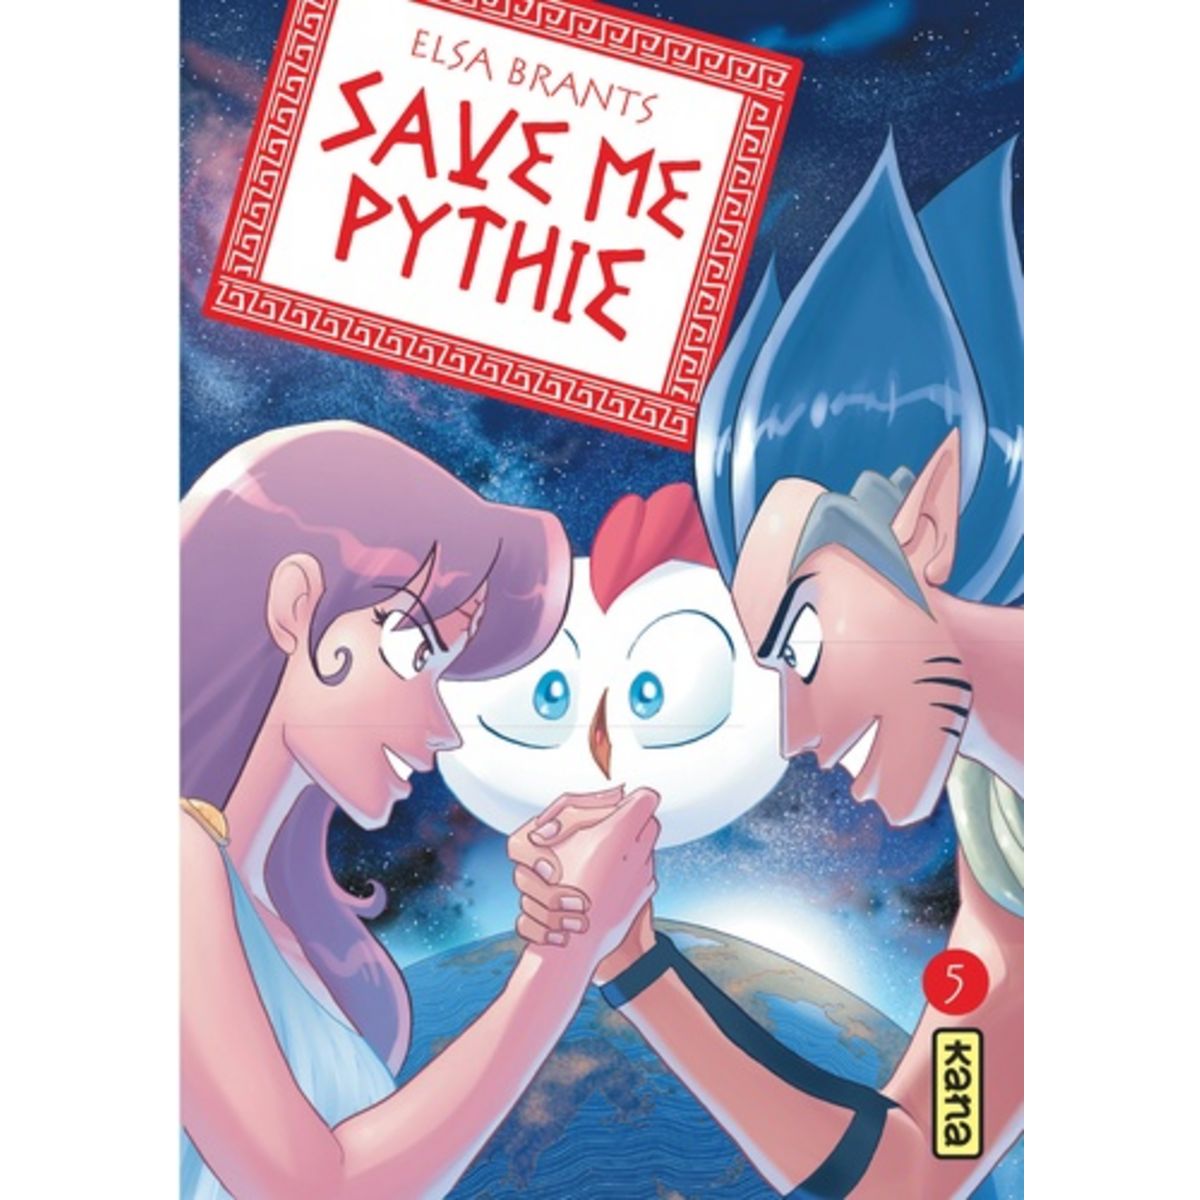  SAVE ME PYTHIE TOME 5, Brants Elsa